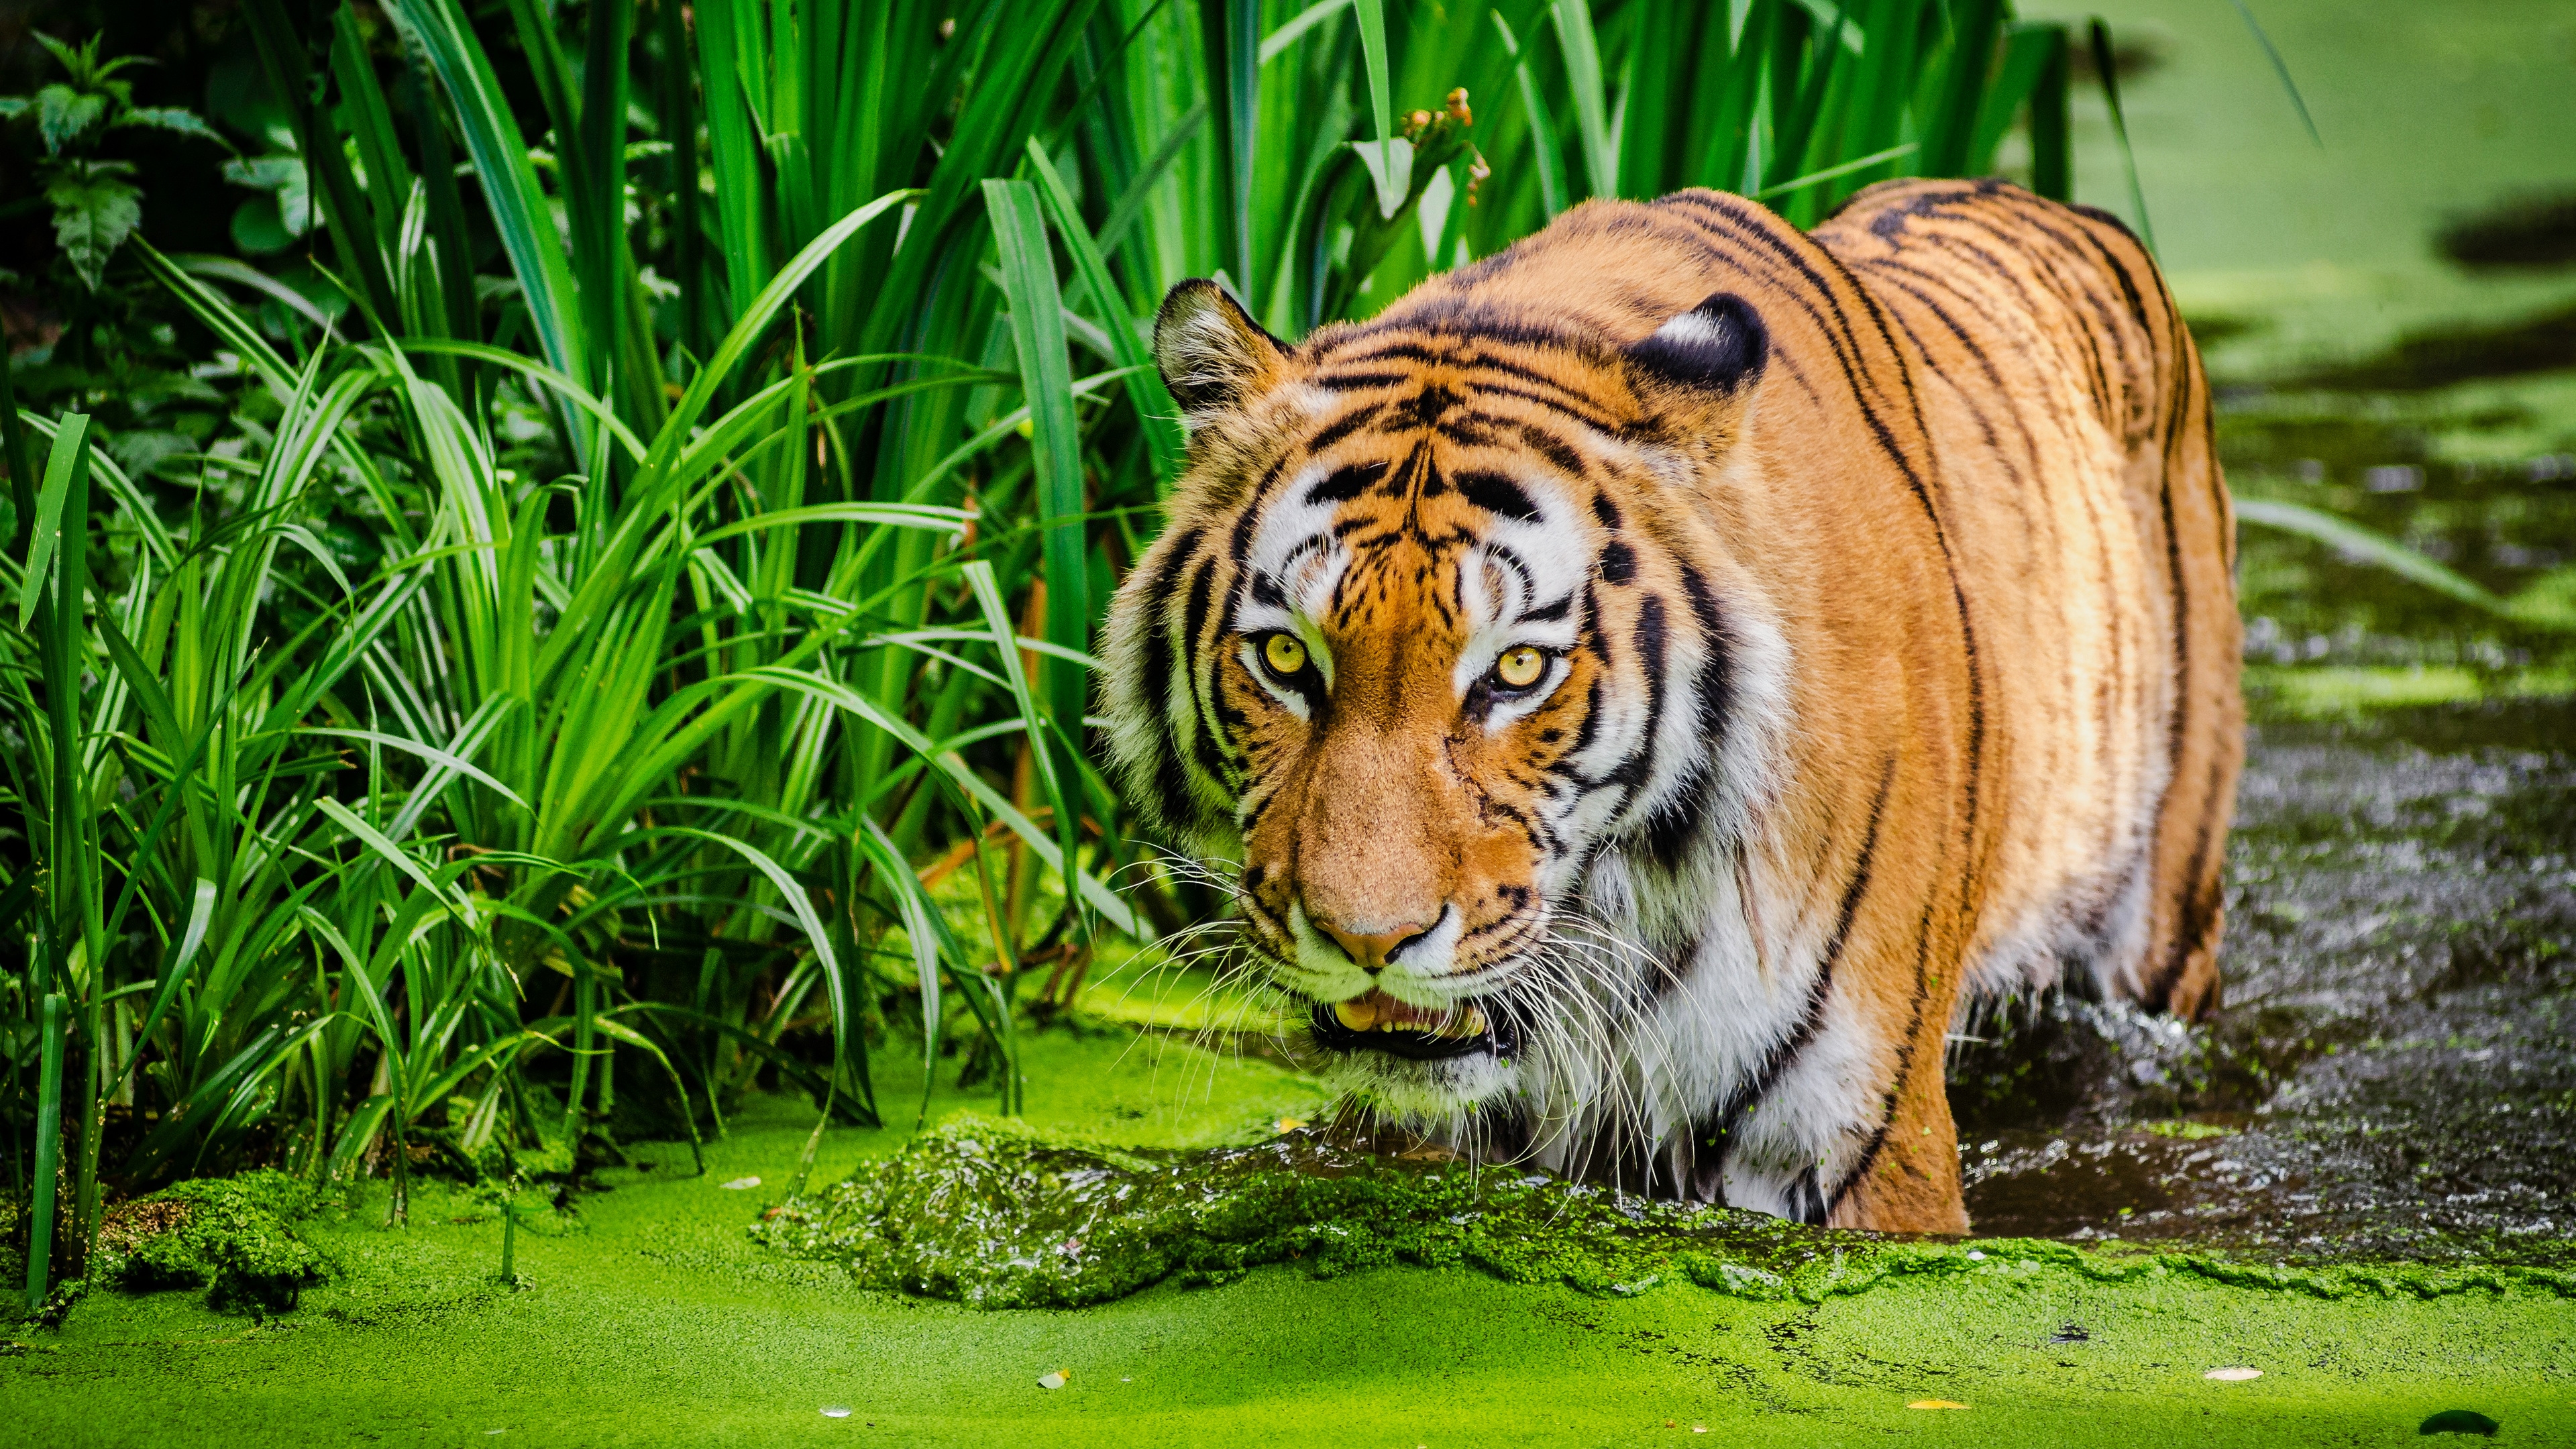 HD wallpaper, Siberian Tiger, Pond, Green, Big Cat